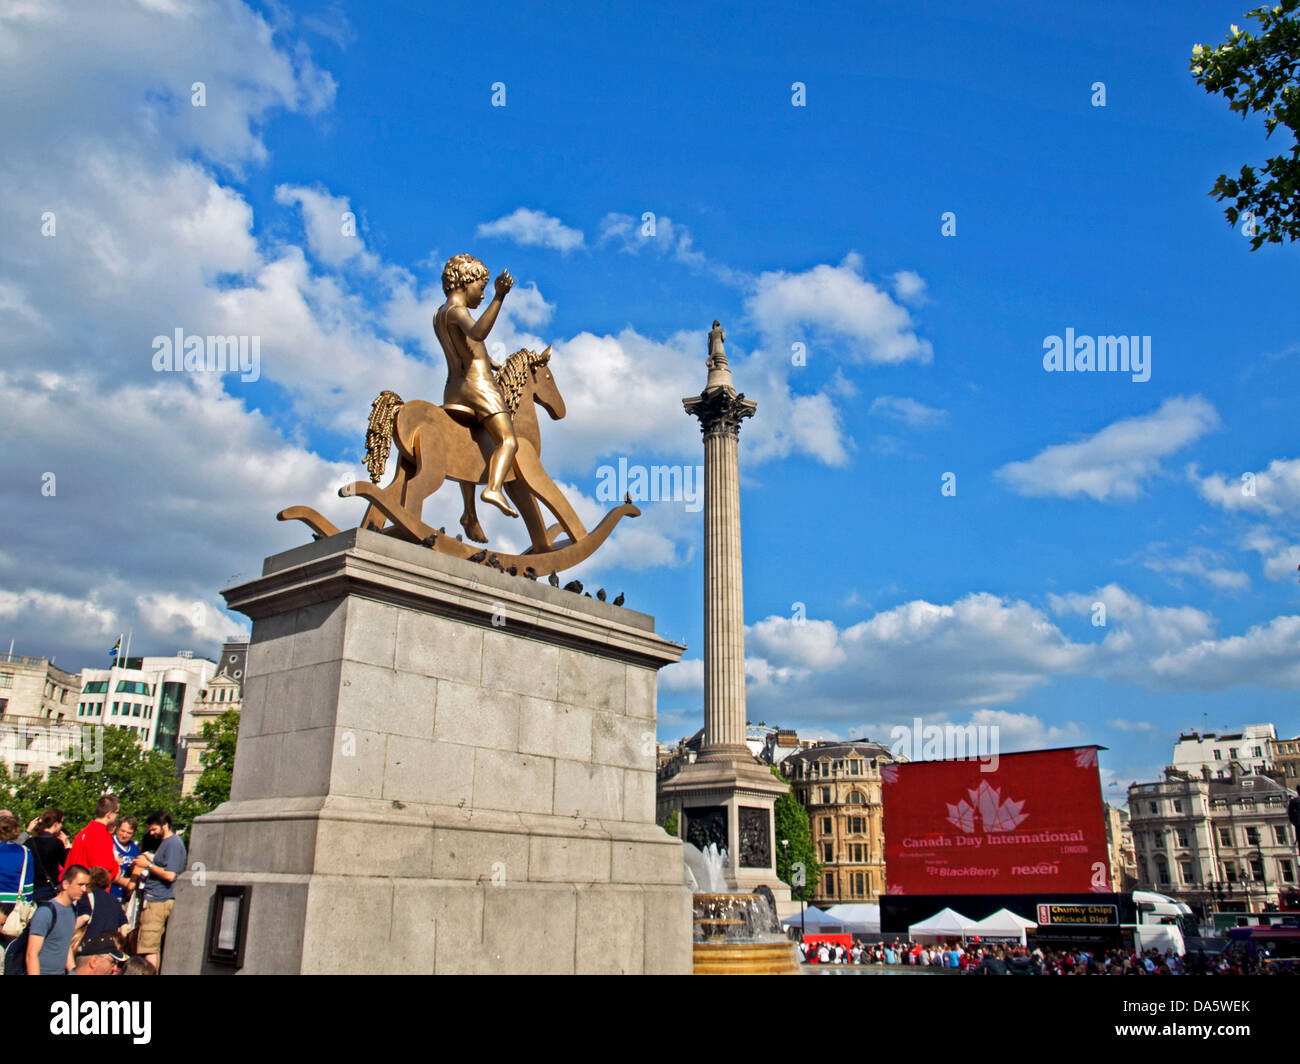 Canada Day 2013 am Trafalgar Square, City of Westminster, London, England, Vereinigtes Königreich Stockfoto